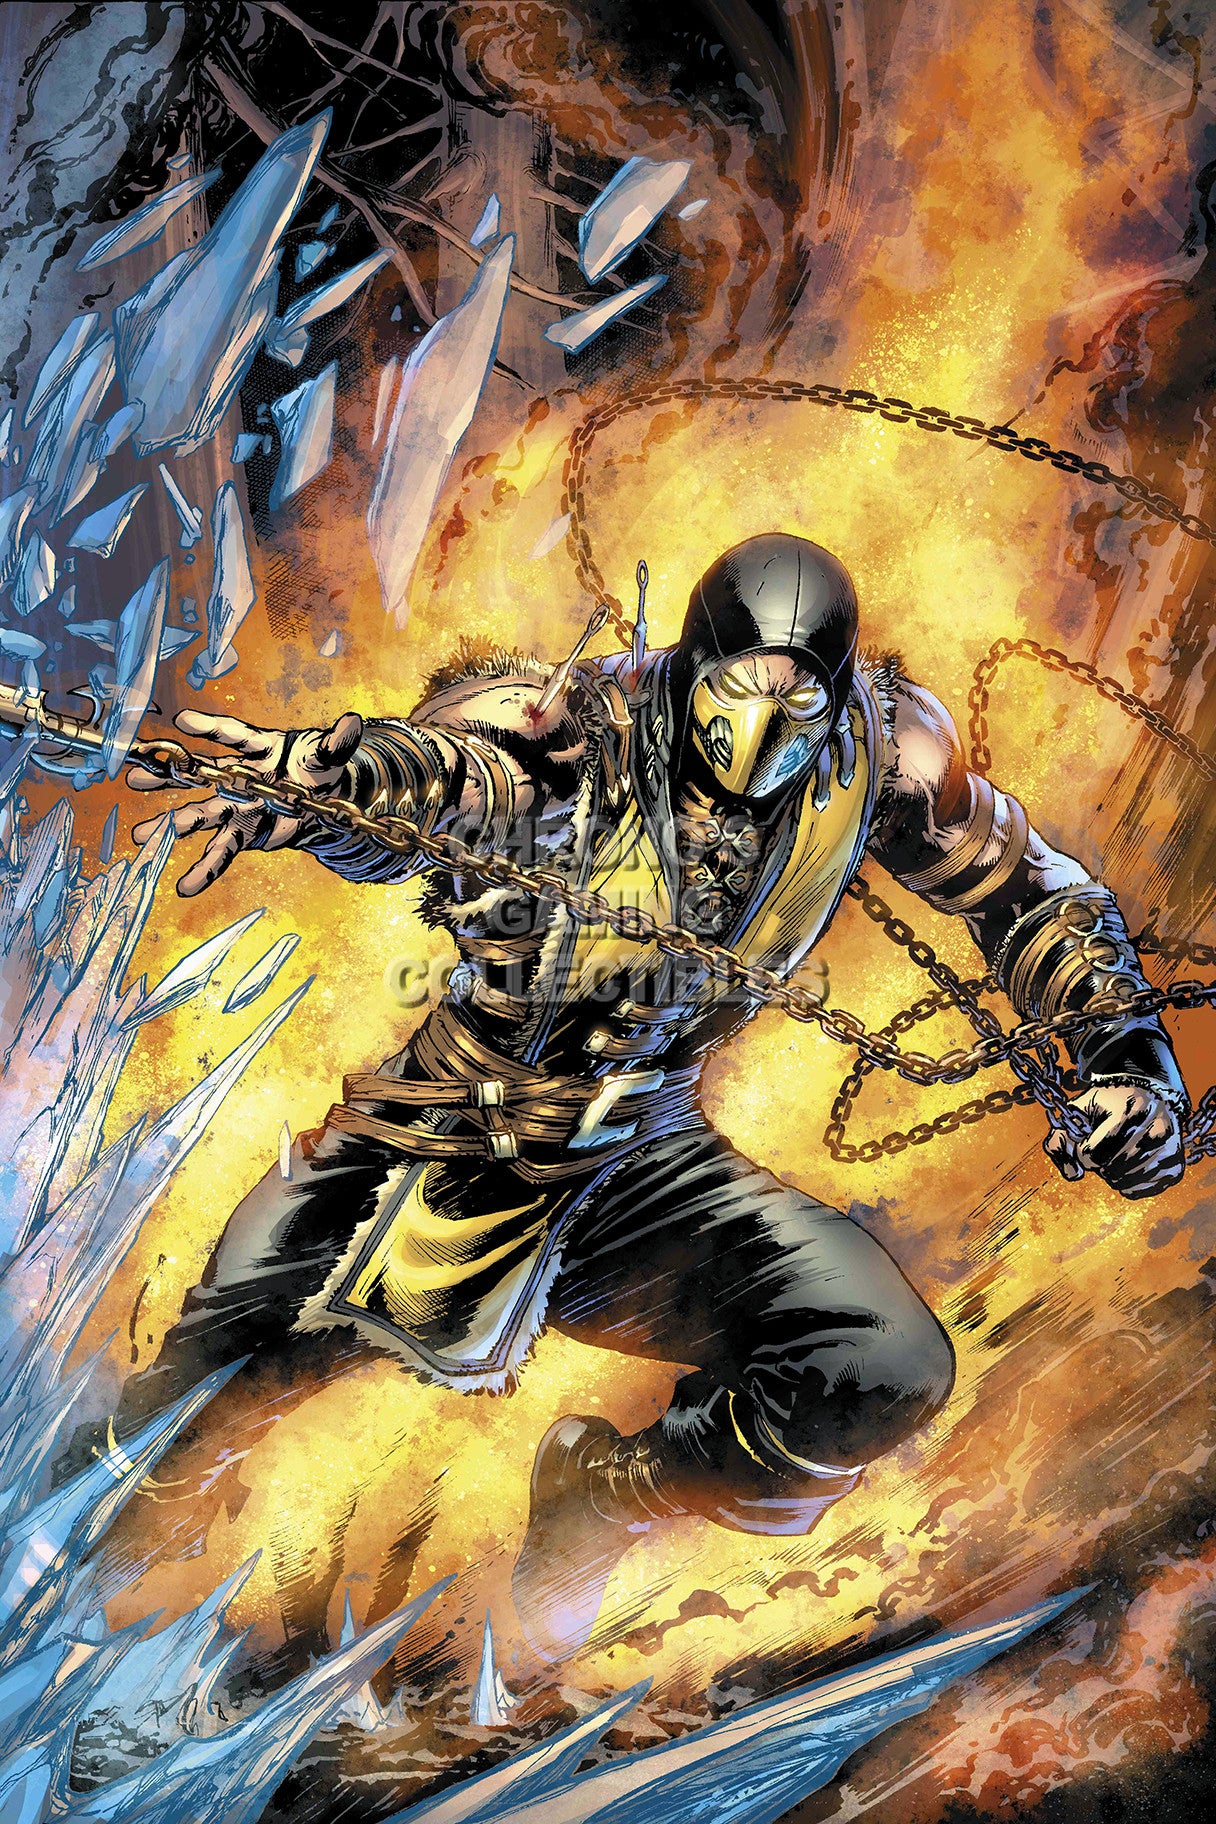 Cgc Huge Poster Mortal Kombat X Scorpion Ps3 Ps4 Xbox 360 One Mkx049